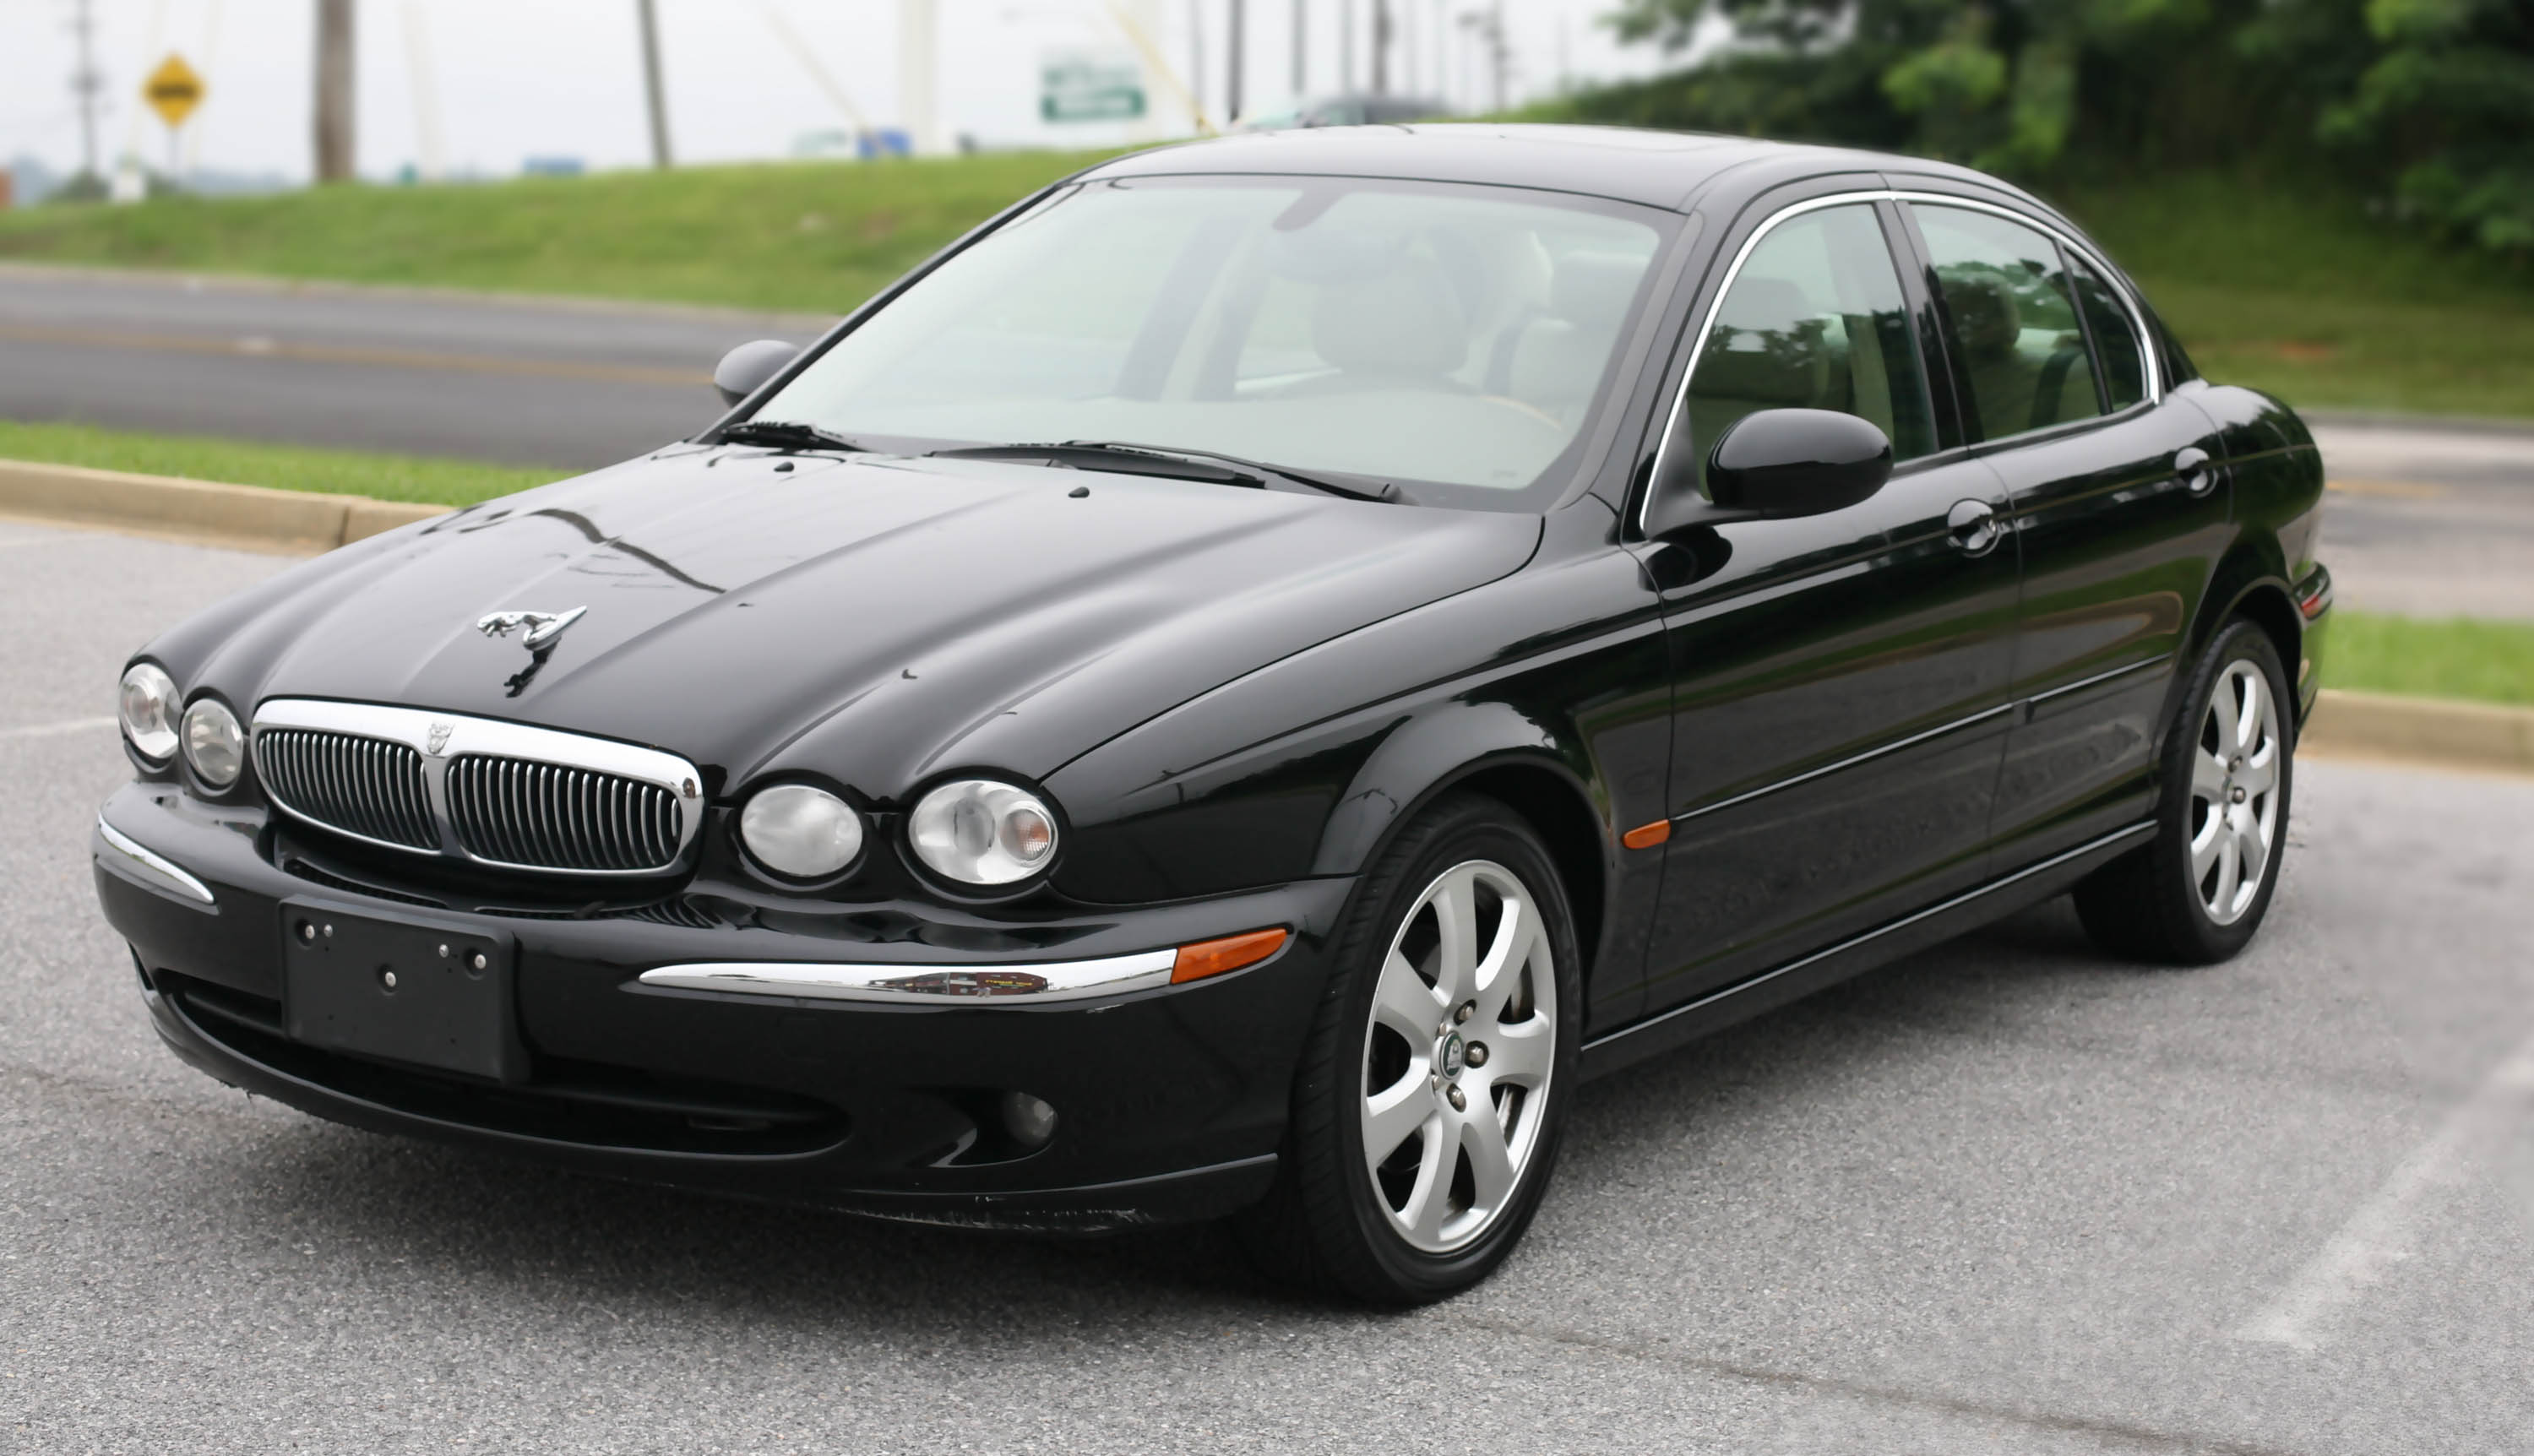 03 x type jaguar